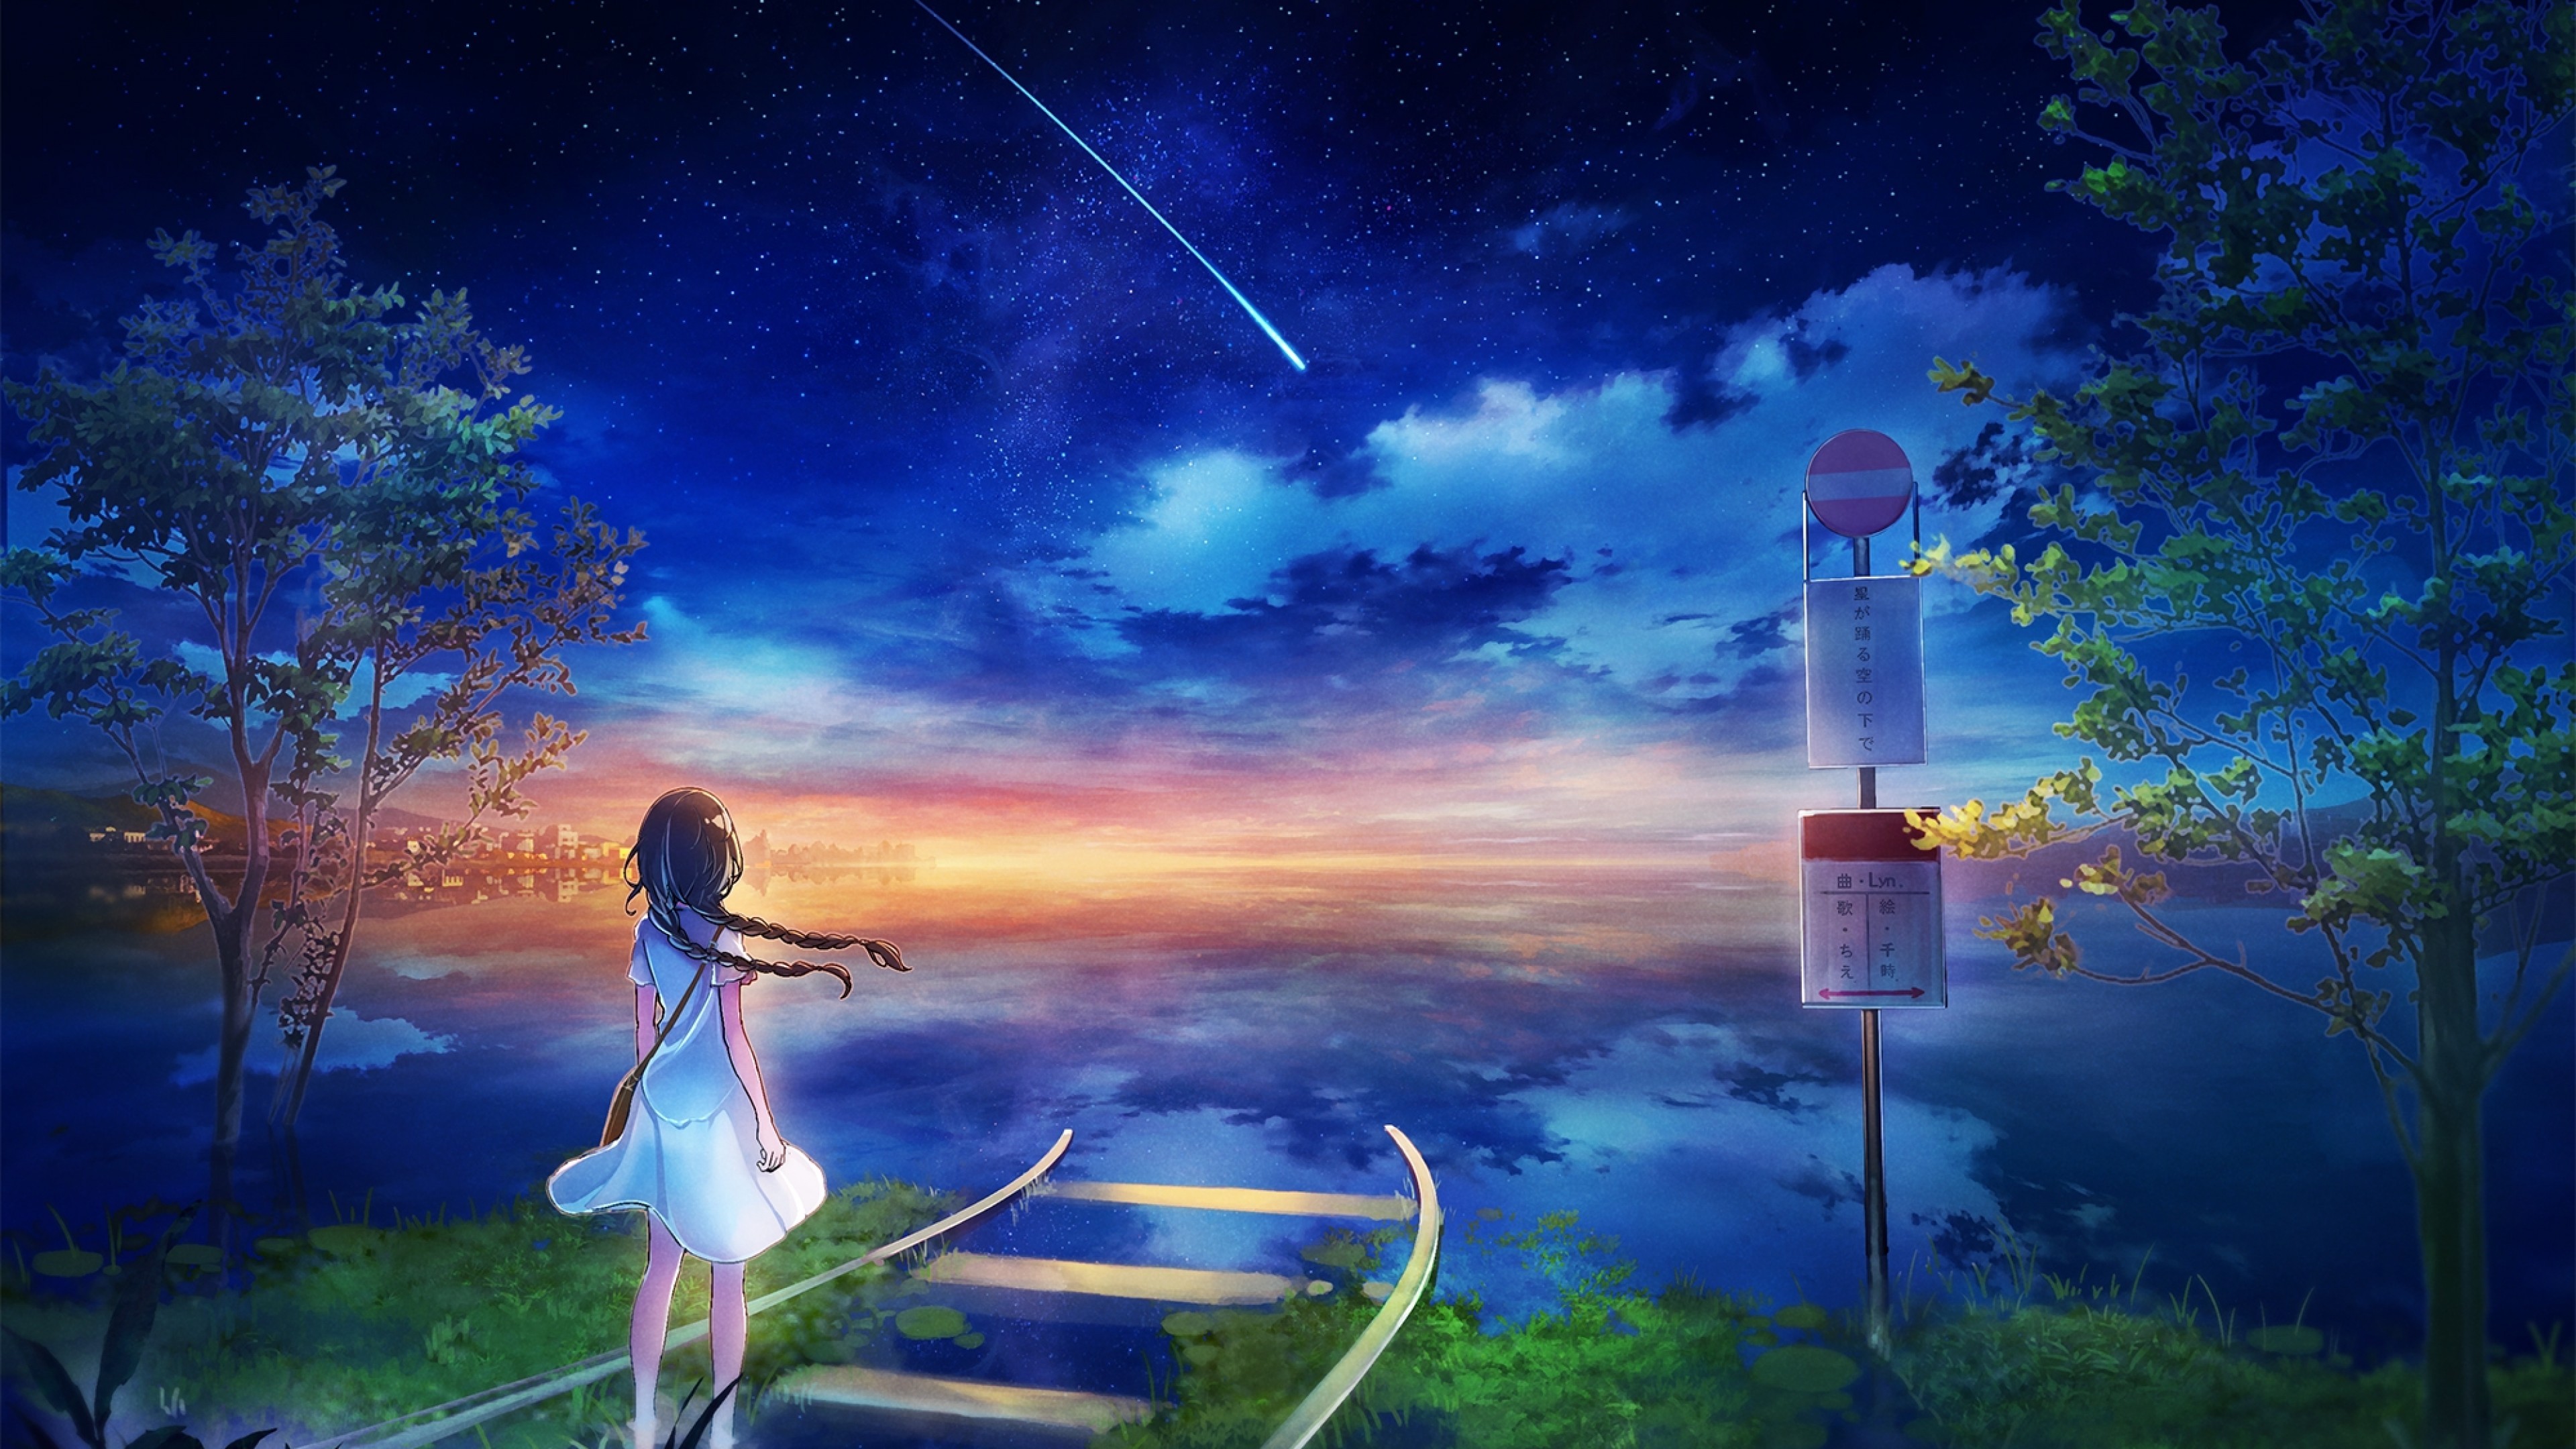 Download 3840x2160 Anime Girl, Railway, Falling Star, Scenic, Sky